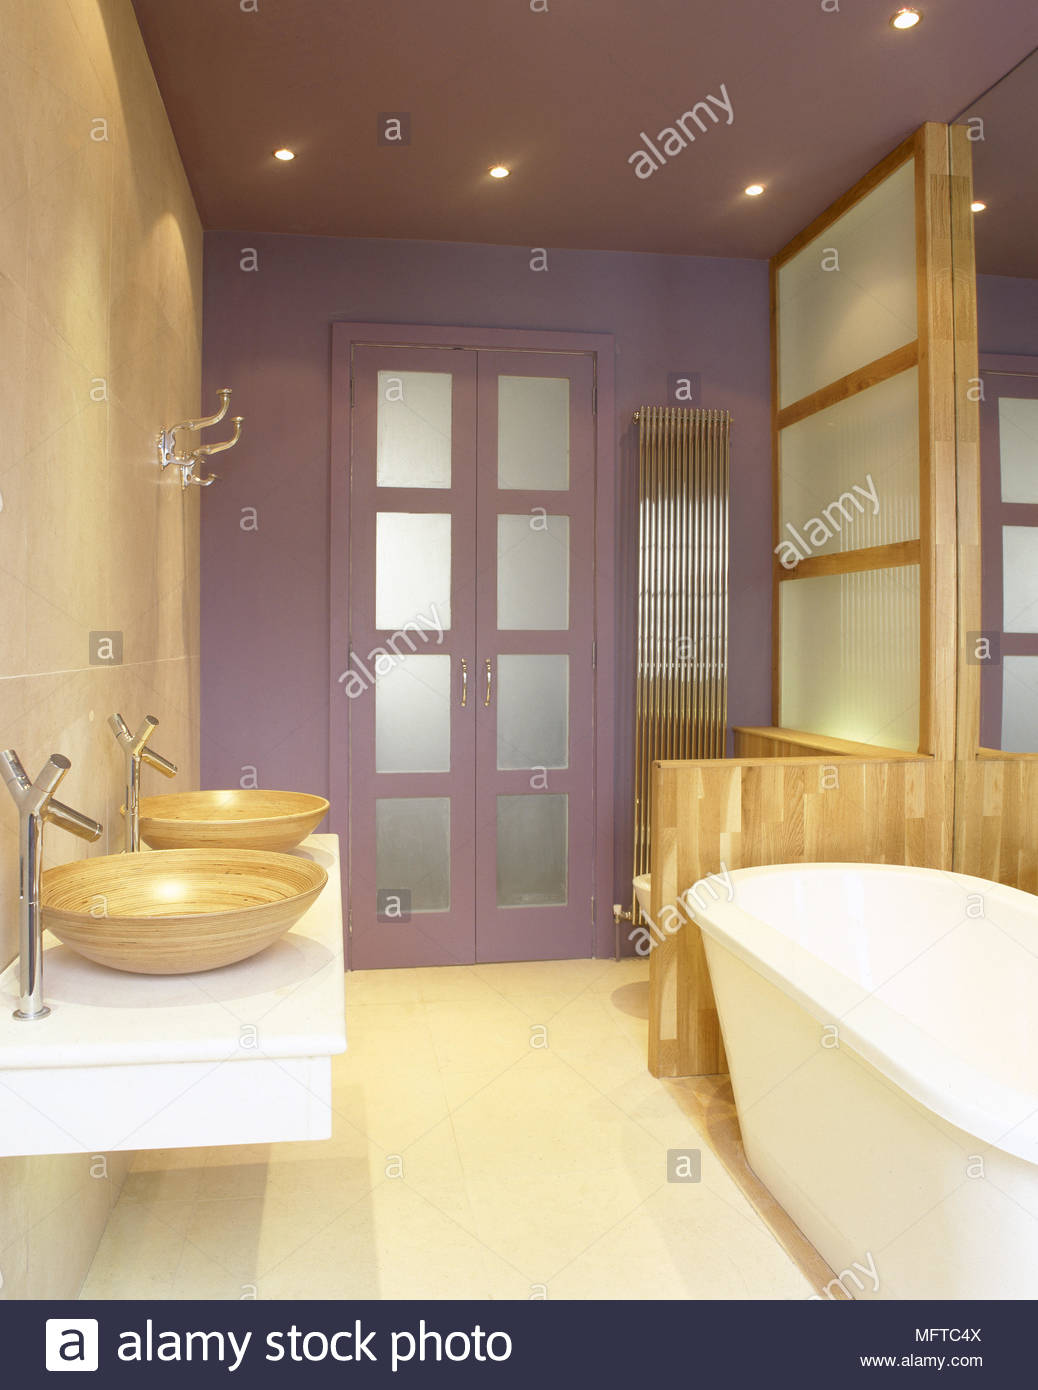 modern tiled bathroom with wooden sinks floating shelf freestanding bathtub and purple accent wall for sink pine coat rack soundbar wire storage baskets bunnings brass hat tree